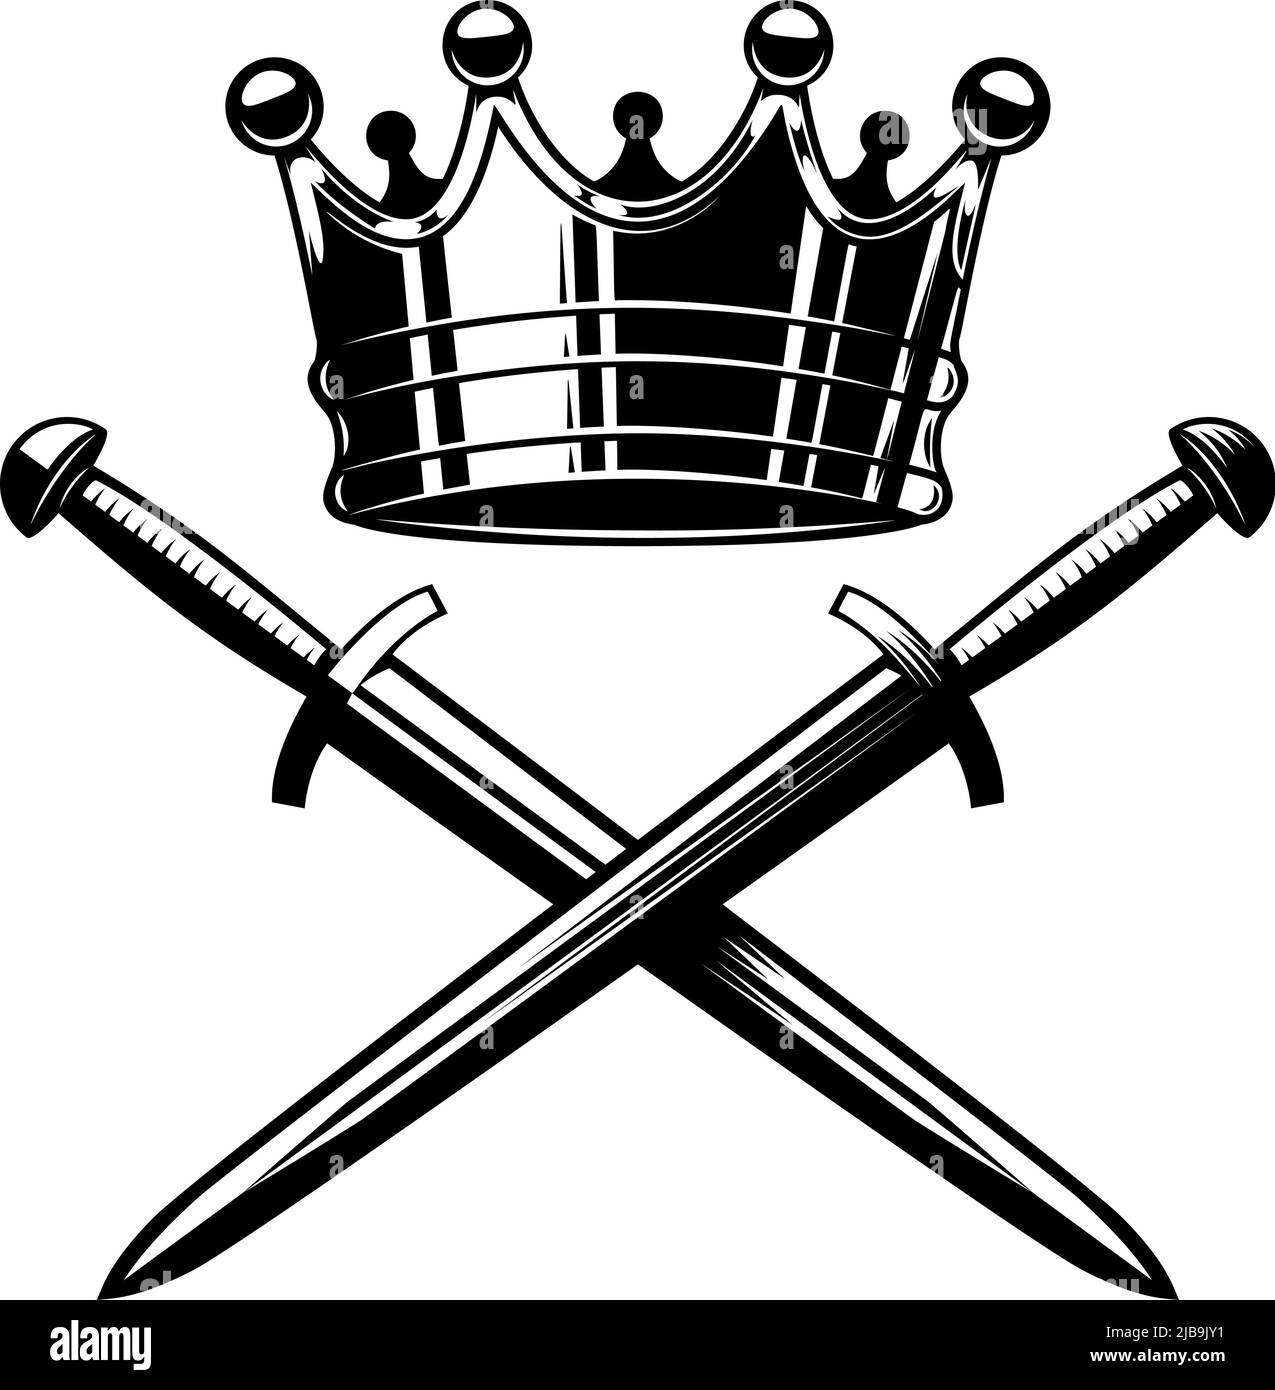 Illustration of king crown and crossed swords in monochrome style. Design element for logo, emblem, sign, poster, t shirt. Vector illustration Stock Vector